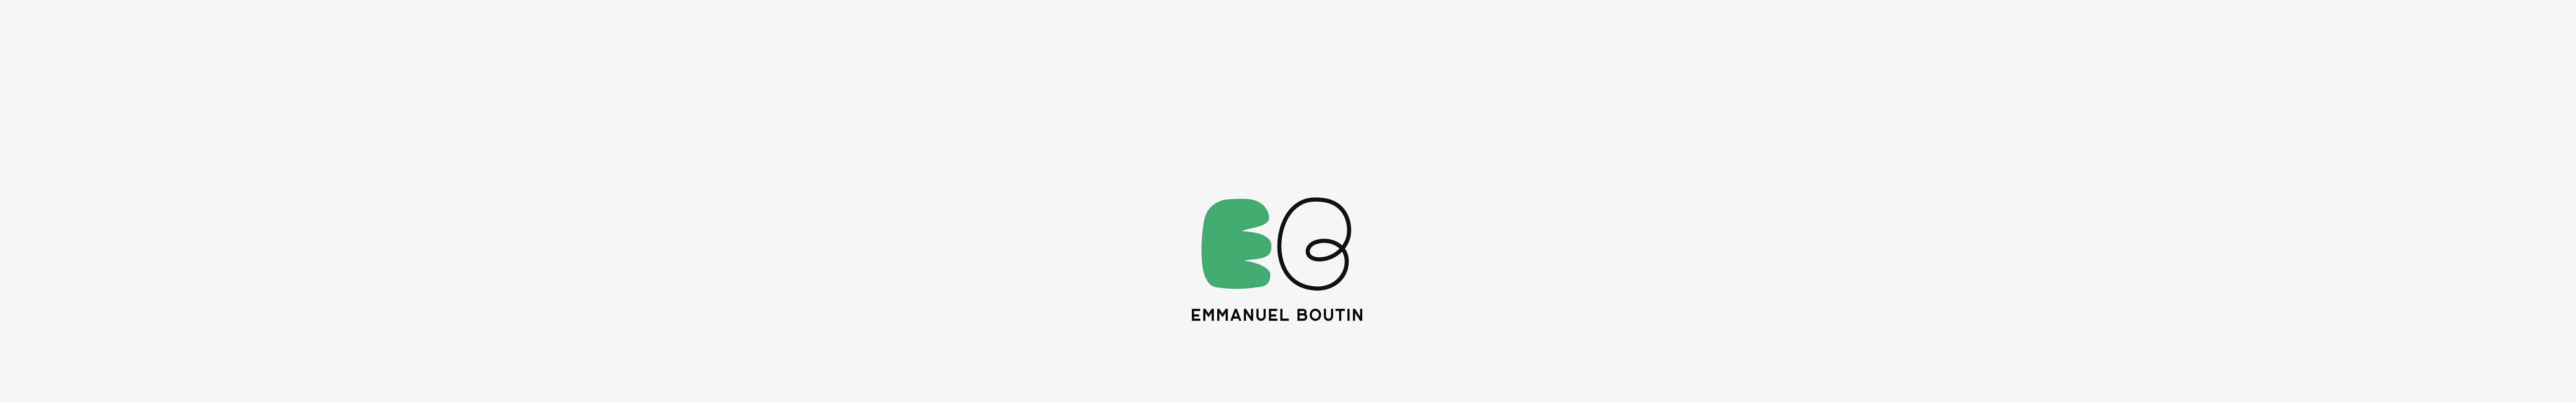 Emmanuel Boutin's profile banner